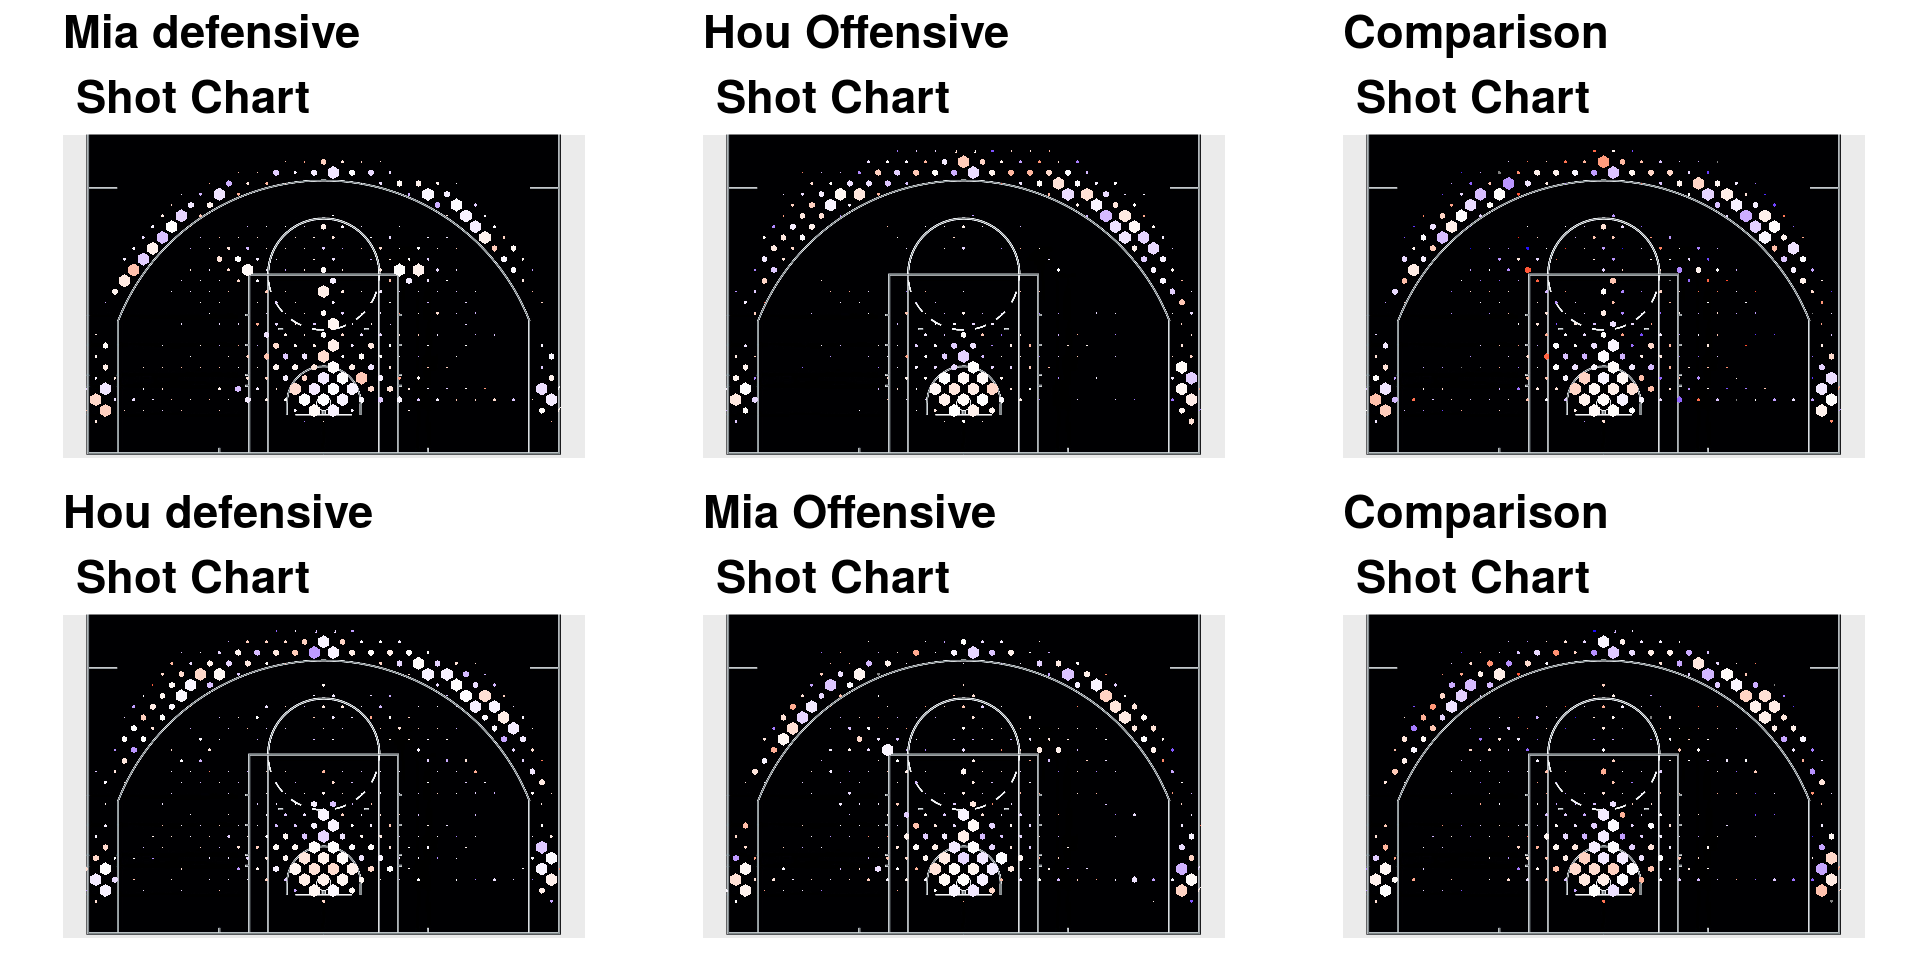 Figure 10. Comparative shot chart of 2016-17 Miami Heat against Houston Rockets